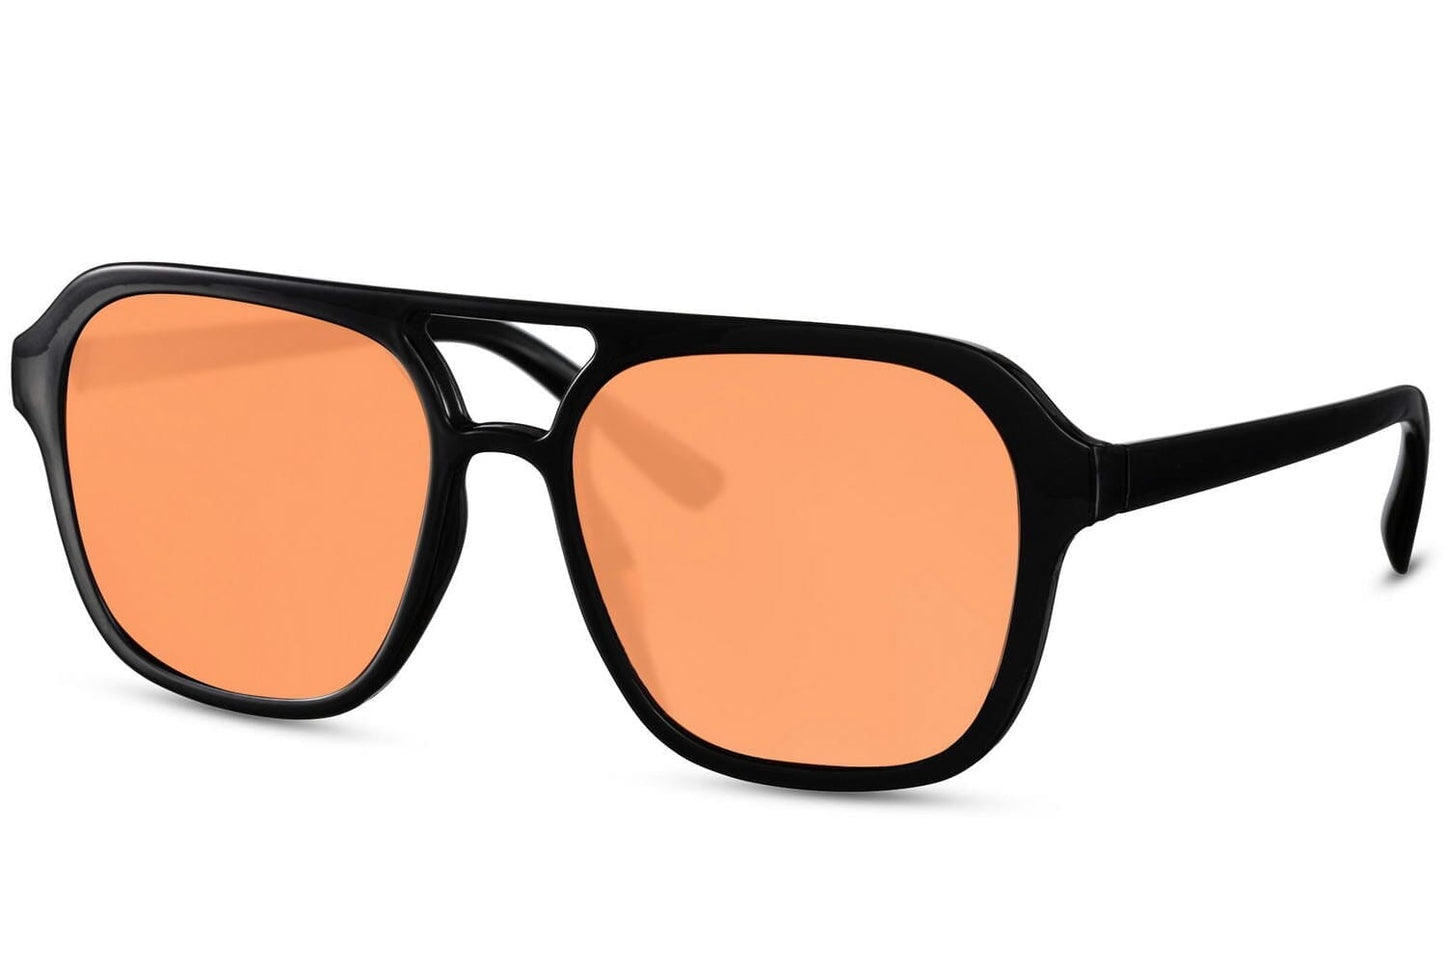 Orange aviator sunglasses. Black frames. UV400 protected.